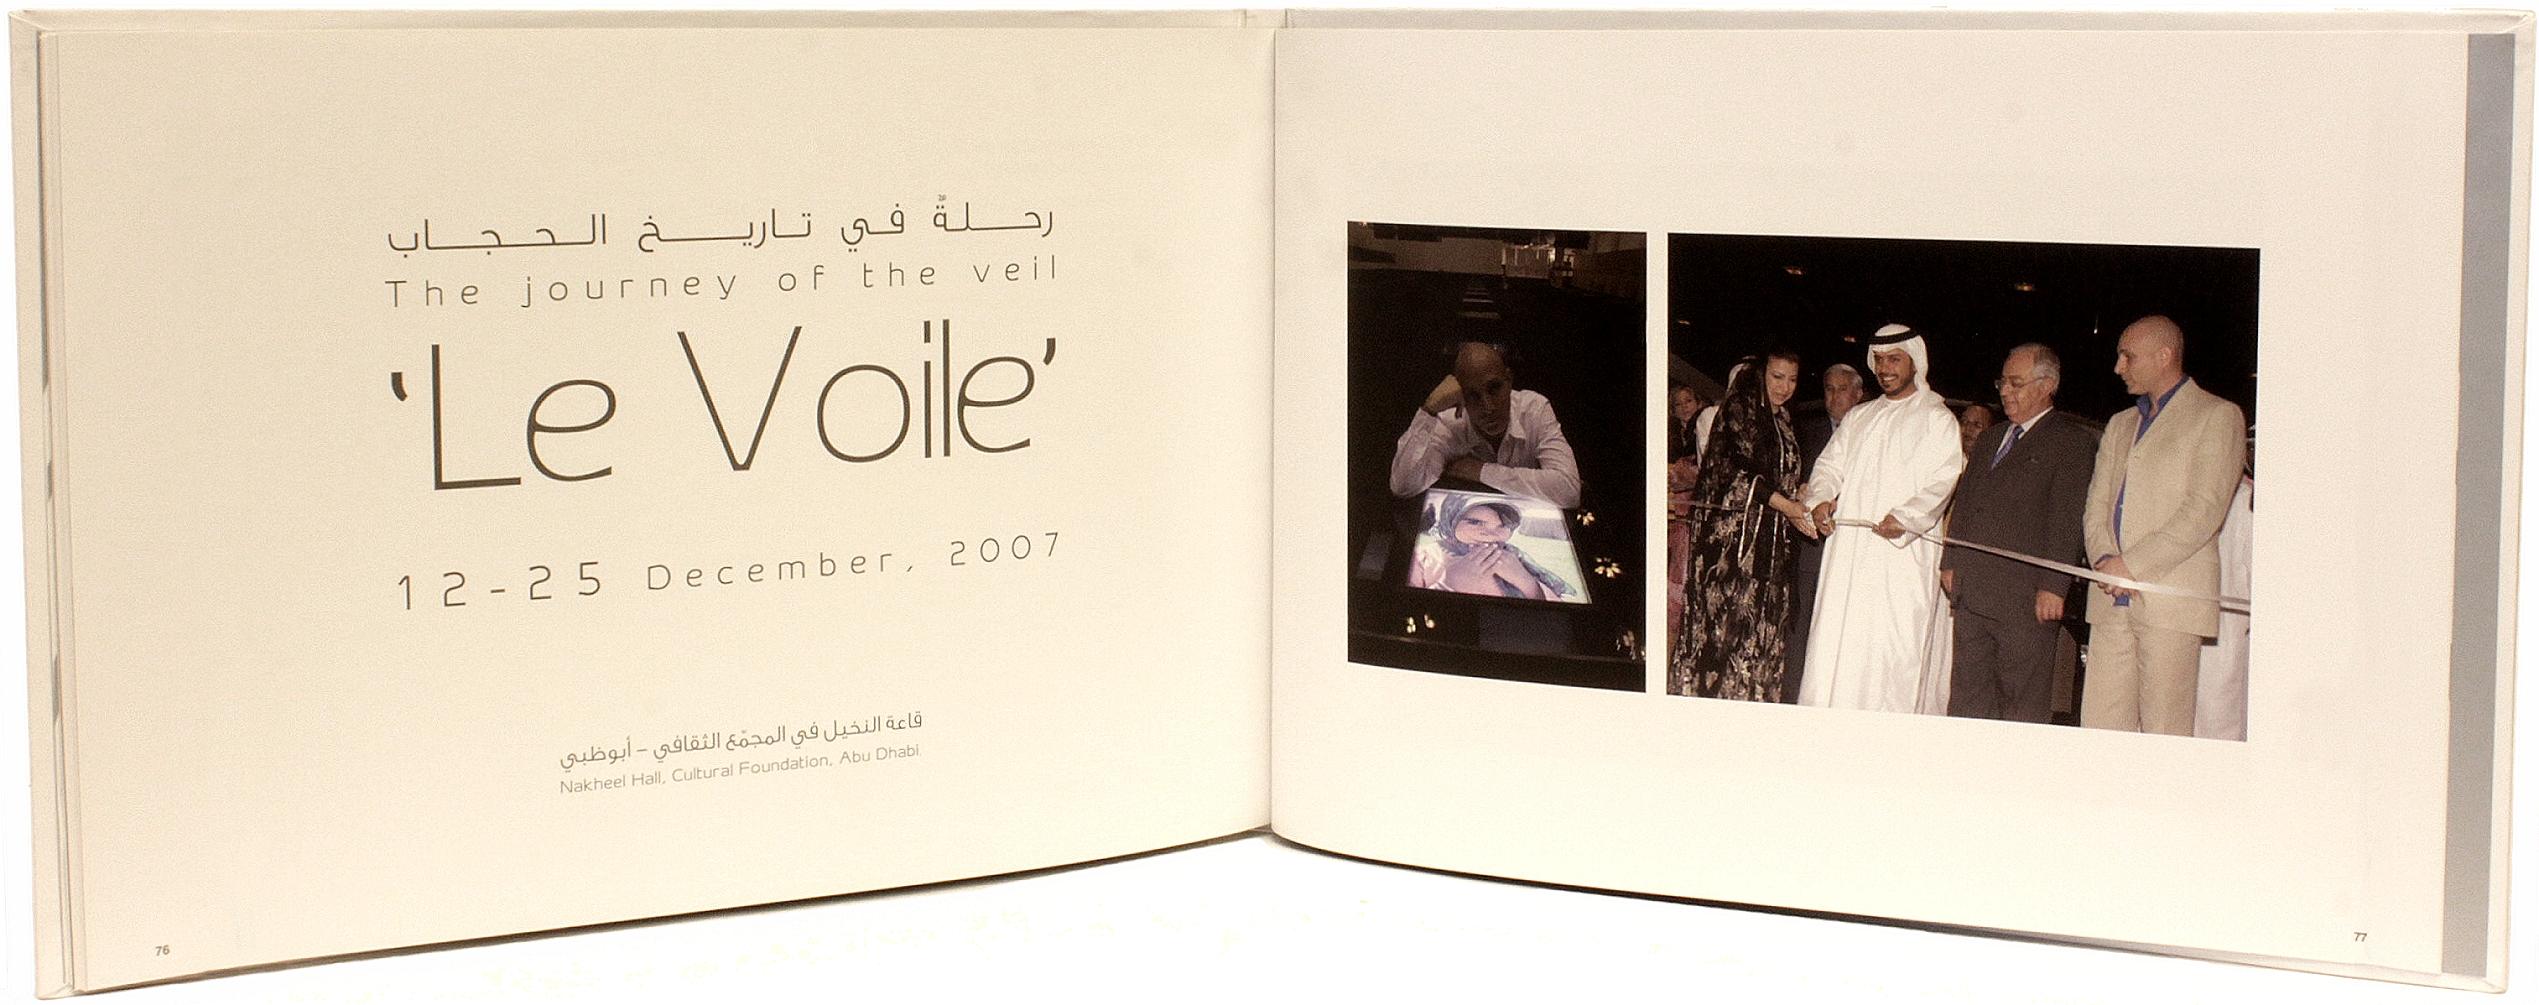 Author: Moukarzel, Roger. 

Title: Le Voile: The Journey of the Veil. 12-25 December, 2007.

Publisher: Abu Dhabi Music and Arts Foundation (ADMAF), 2007.

Description: Deluxe portfolio edition. 2-1/4